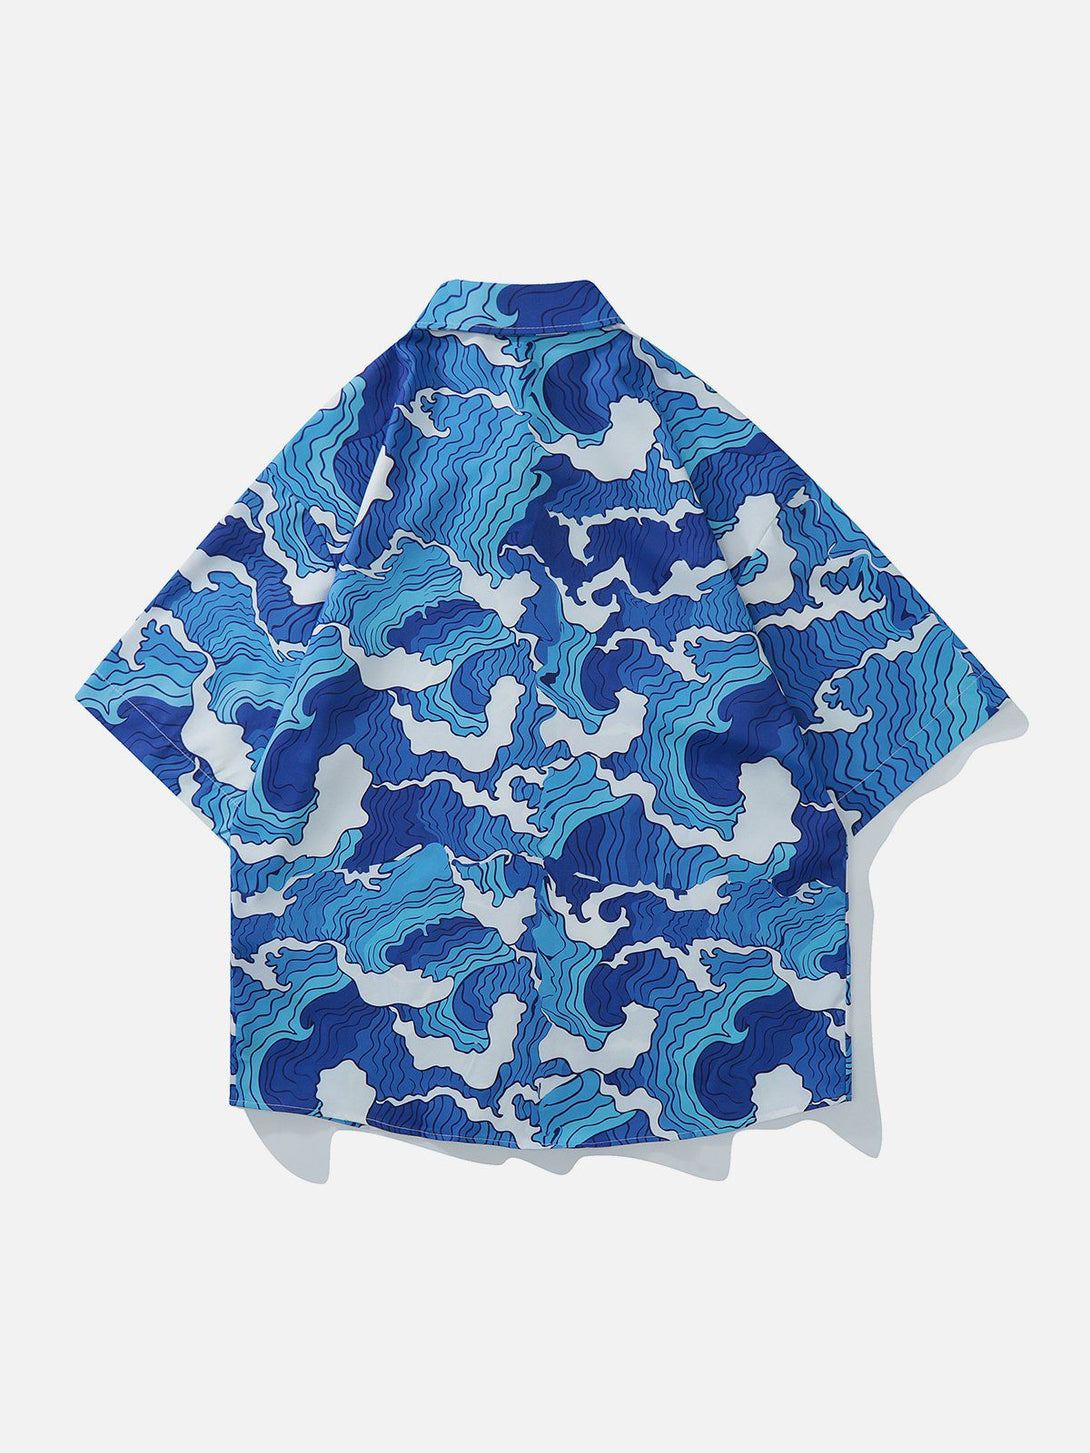 Majesda® - Sea Wave Print Short Sleeve Shirts outfit ideas streetwear fashion